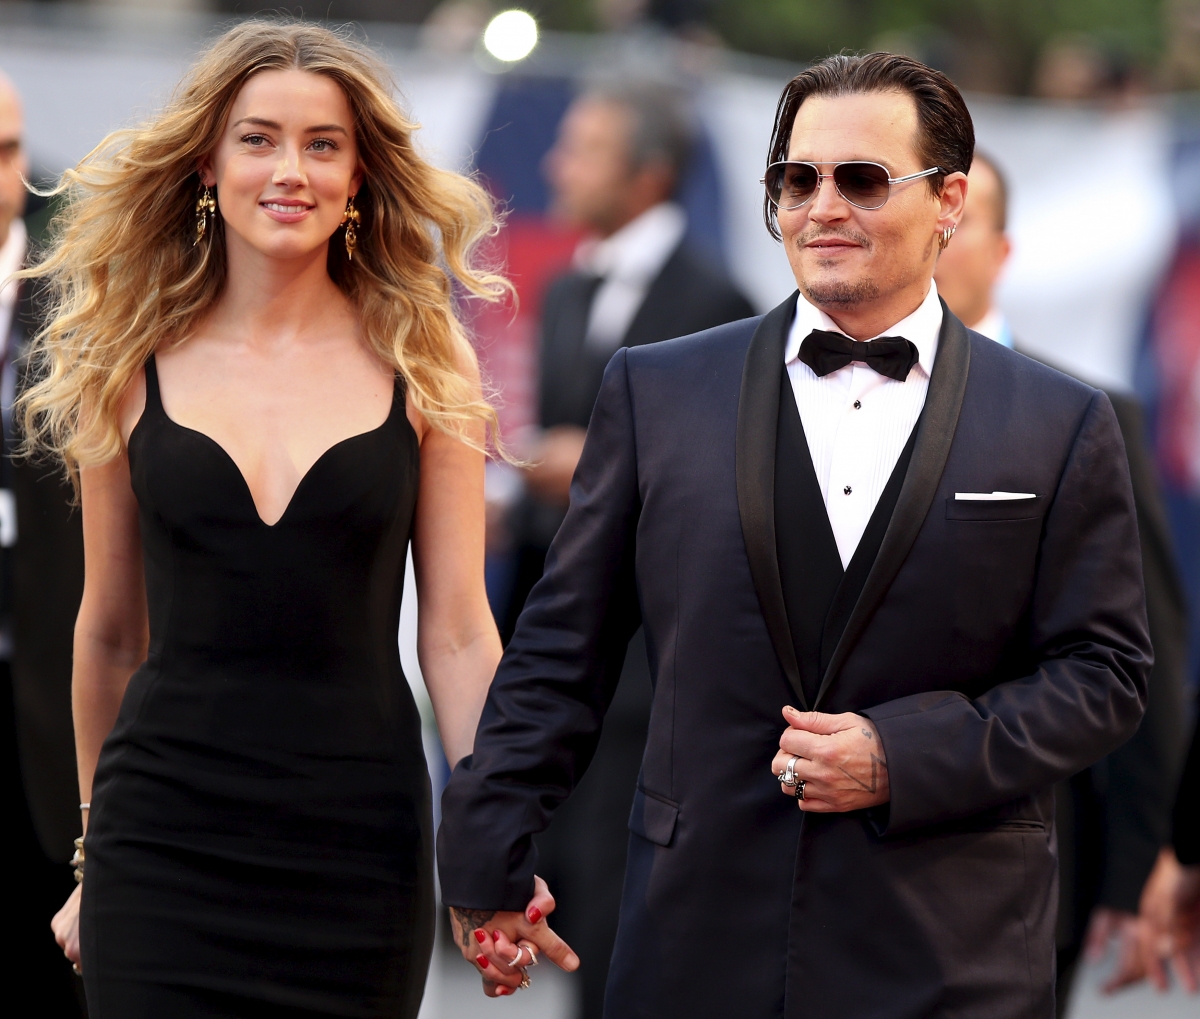 Johnny Depp v Amber Heard: $50 million defamation suit takes an ugly turn - IBTimes India1200 x 1019